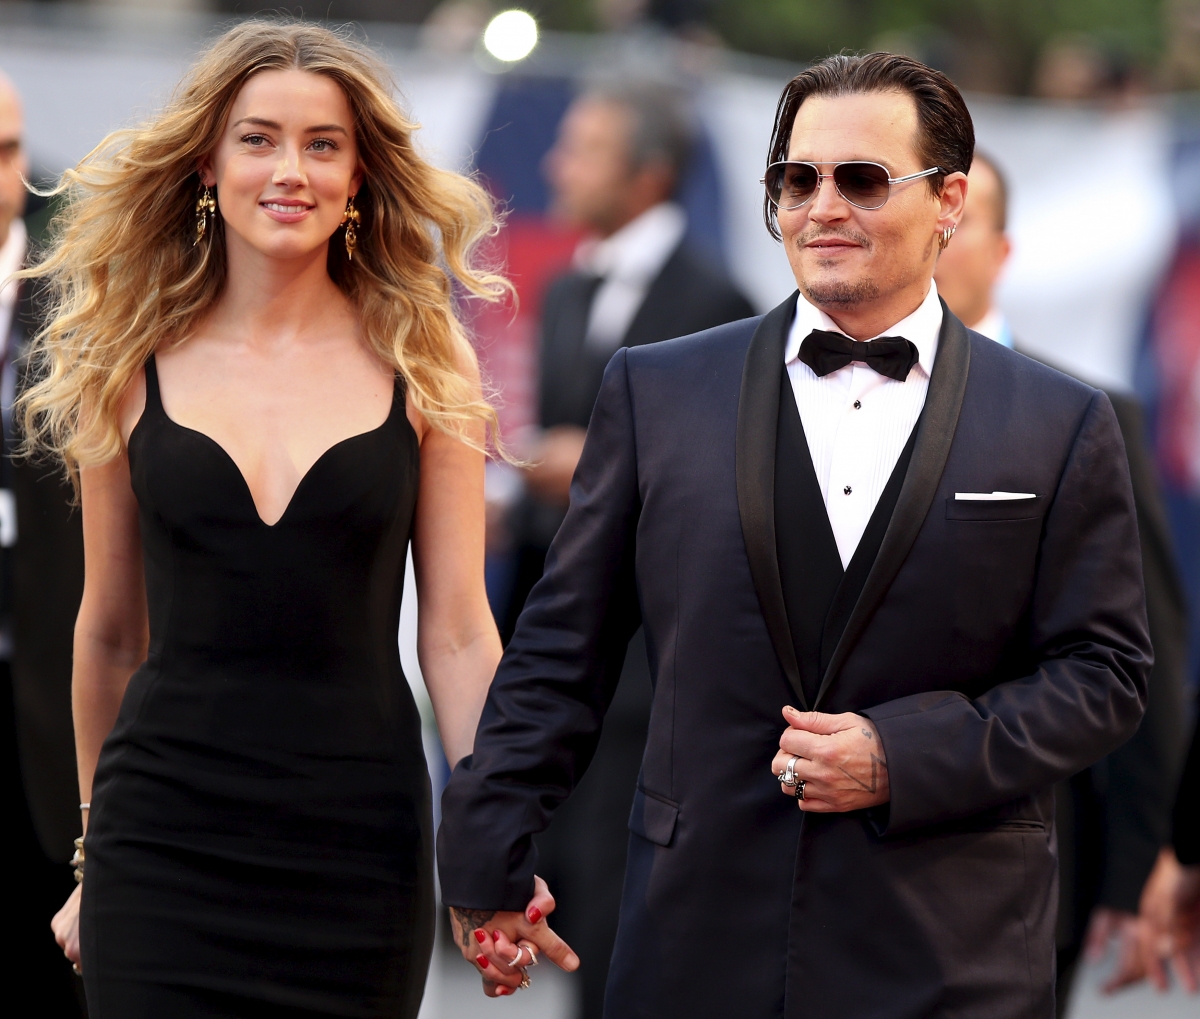 Johnny Depp v Amber Heard: $50 million defamation suit takes an ugly turn - IBTimes India1200 x 1019